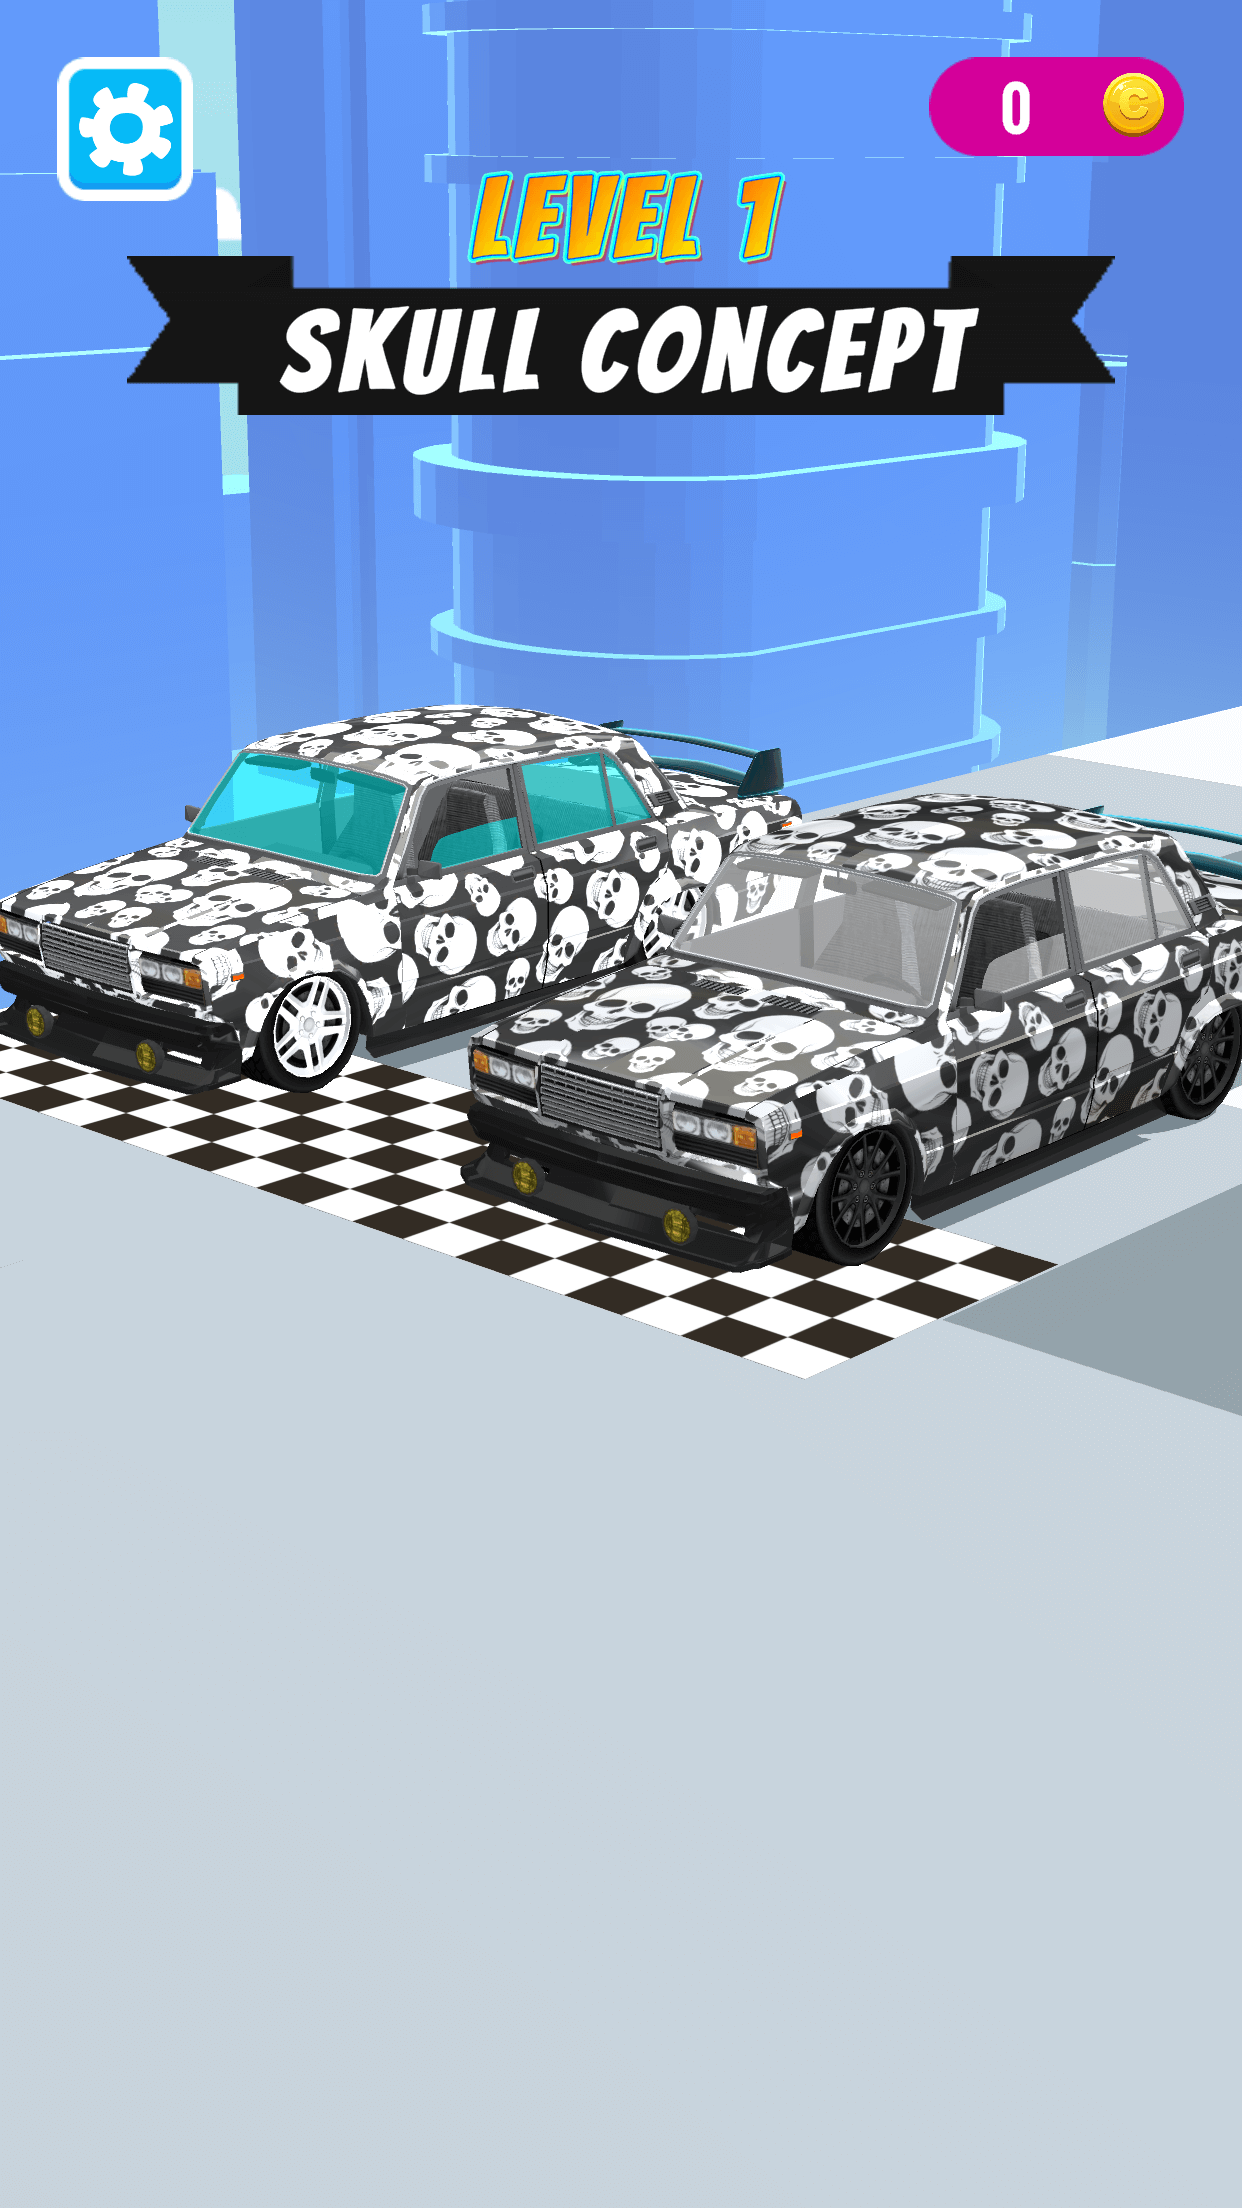 Modified Car Battle 3D Hypercasual